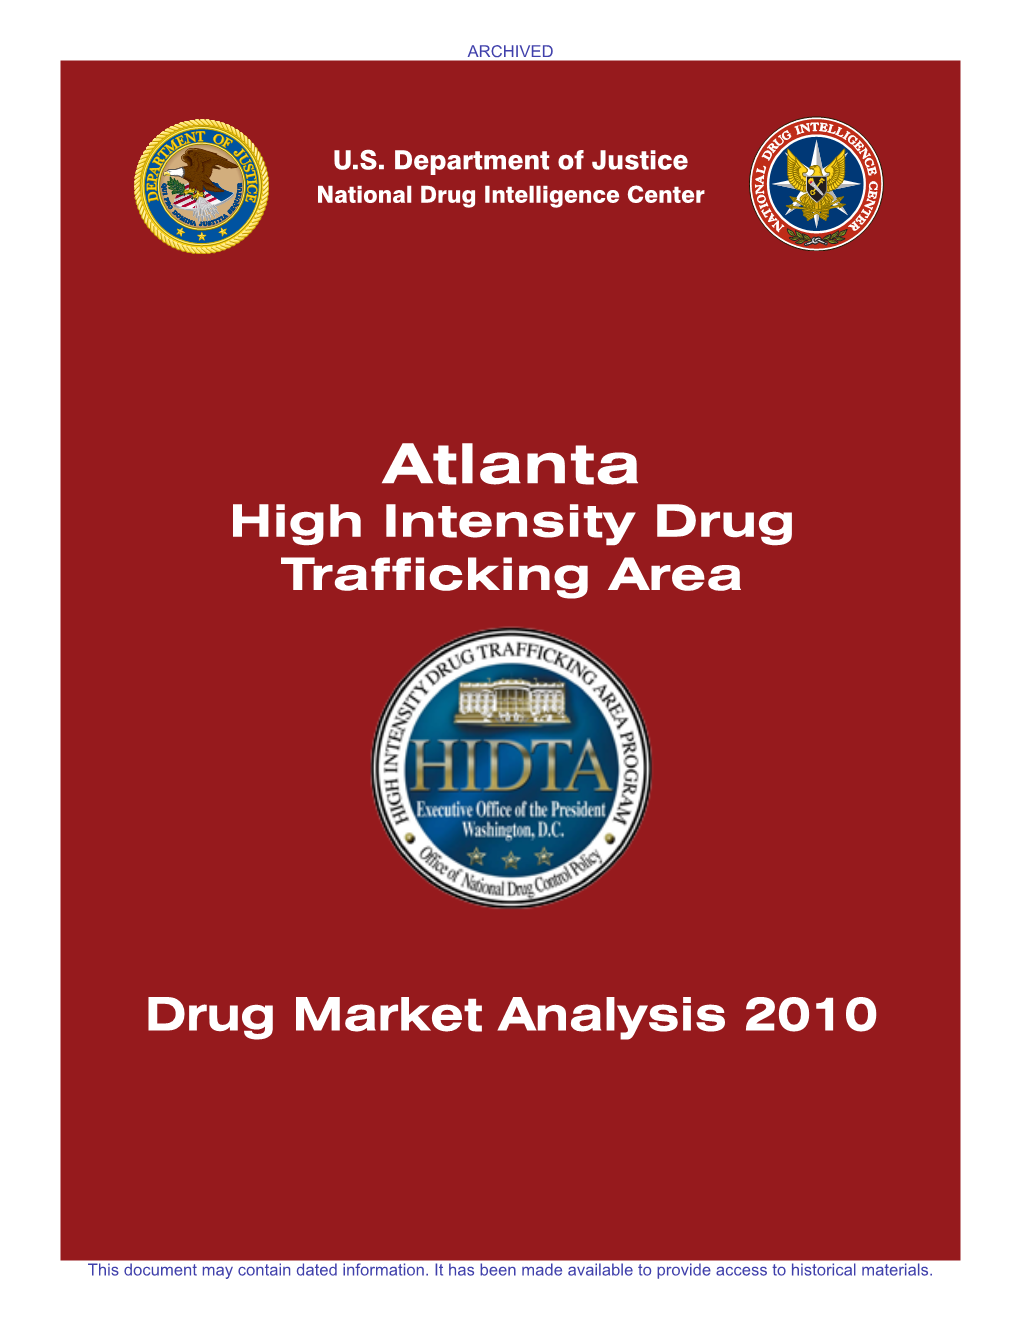 Atlanta High Intensity Drug Trafficking Area